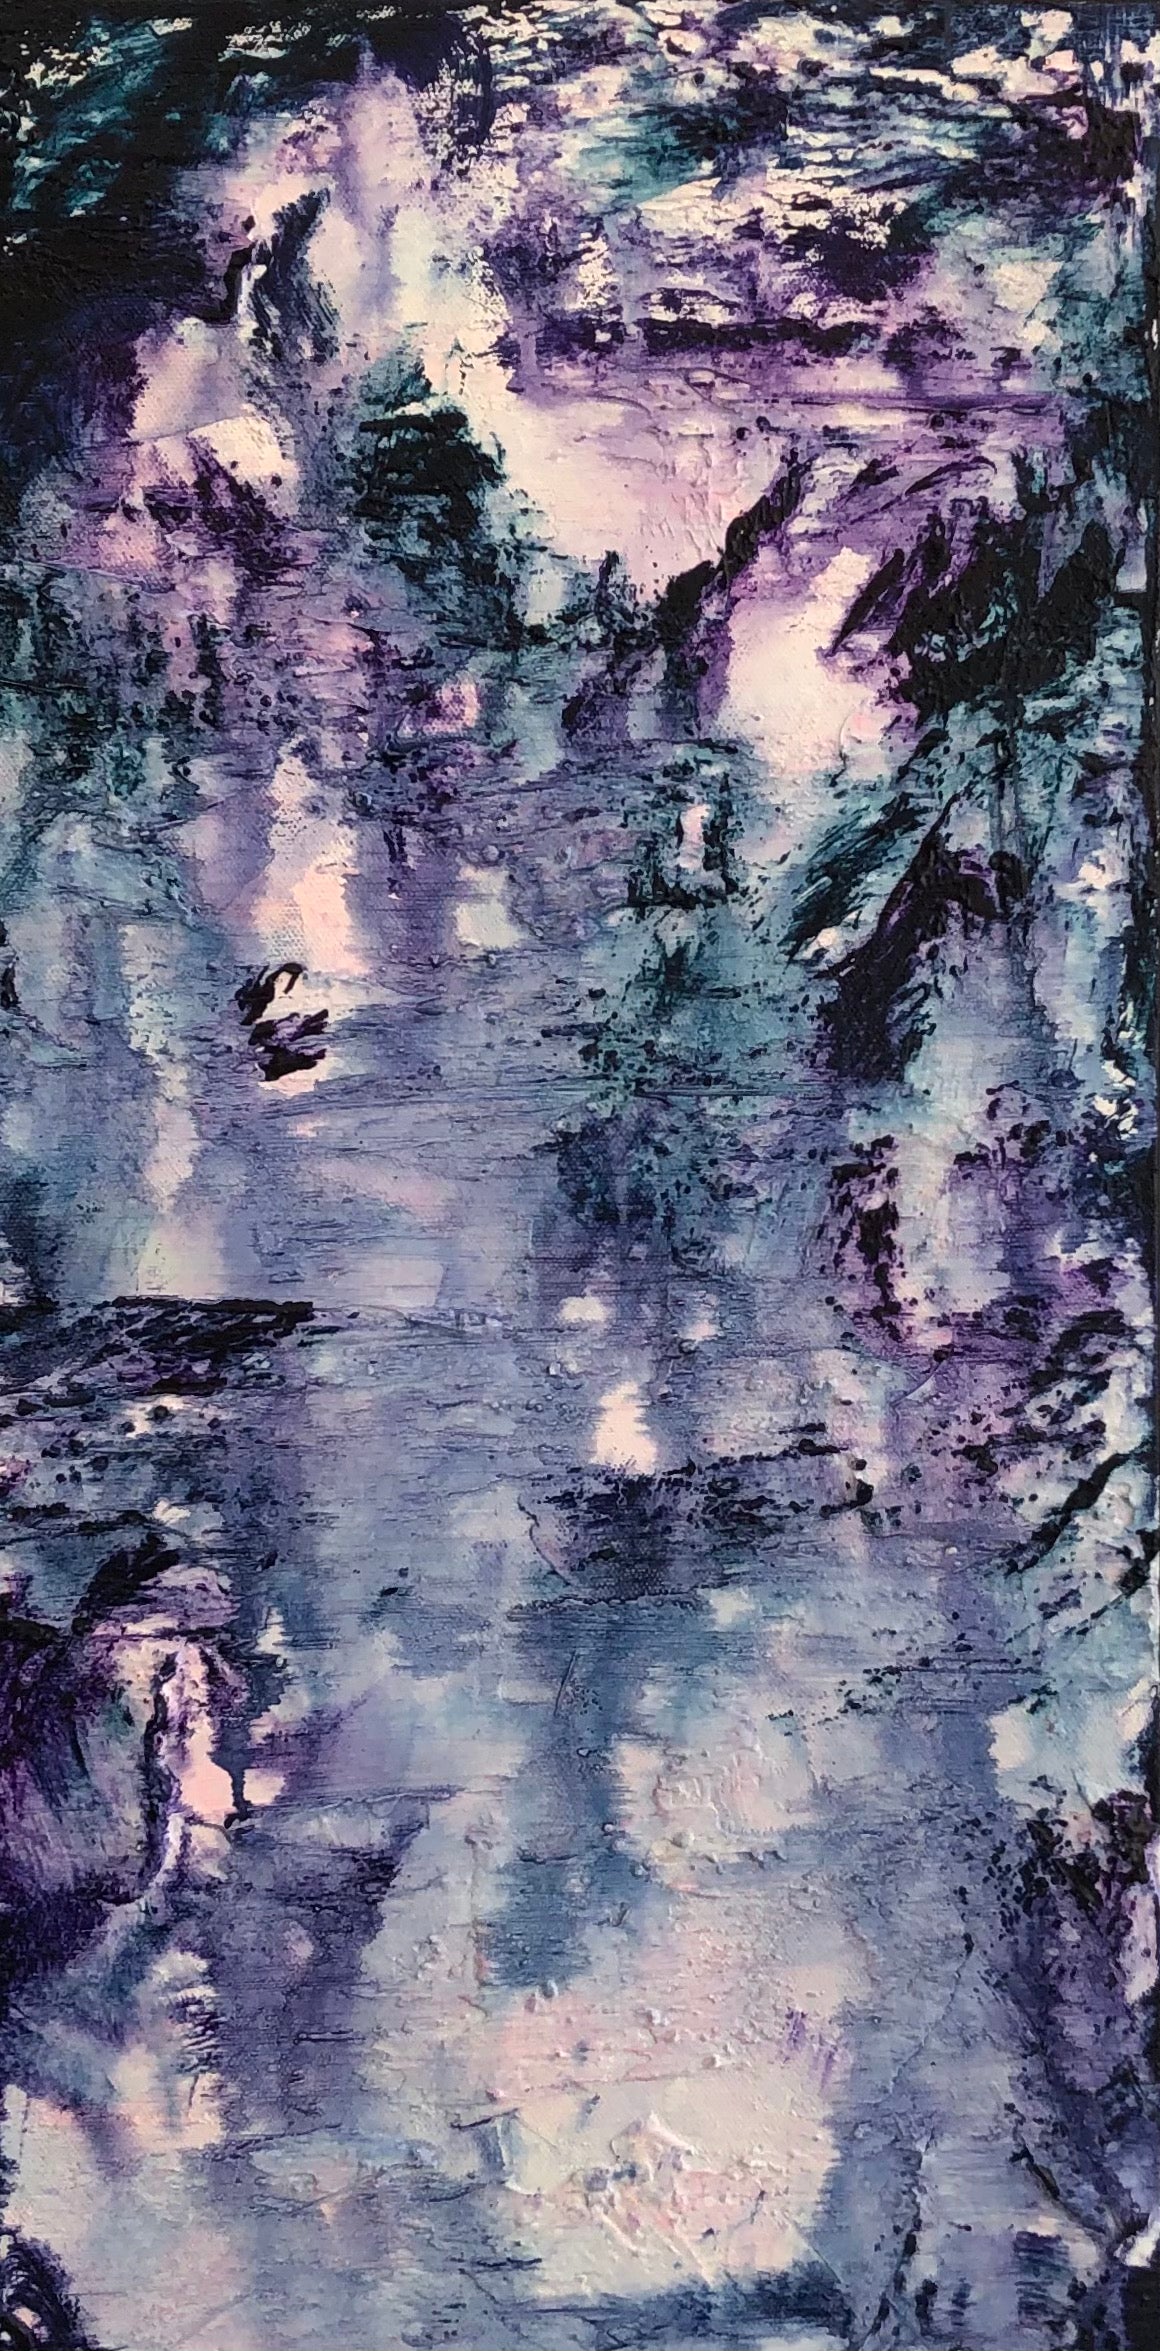 Cascada púrpura de Courtney Mixed Studios